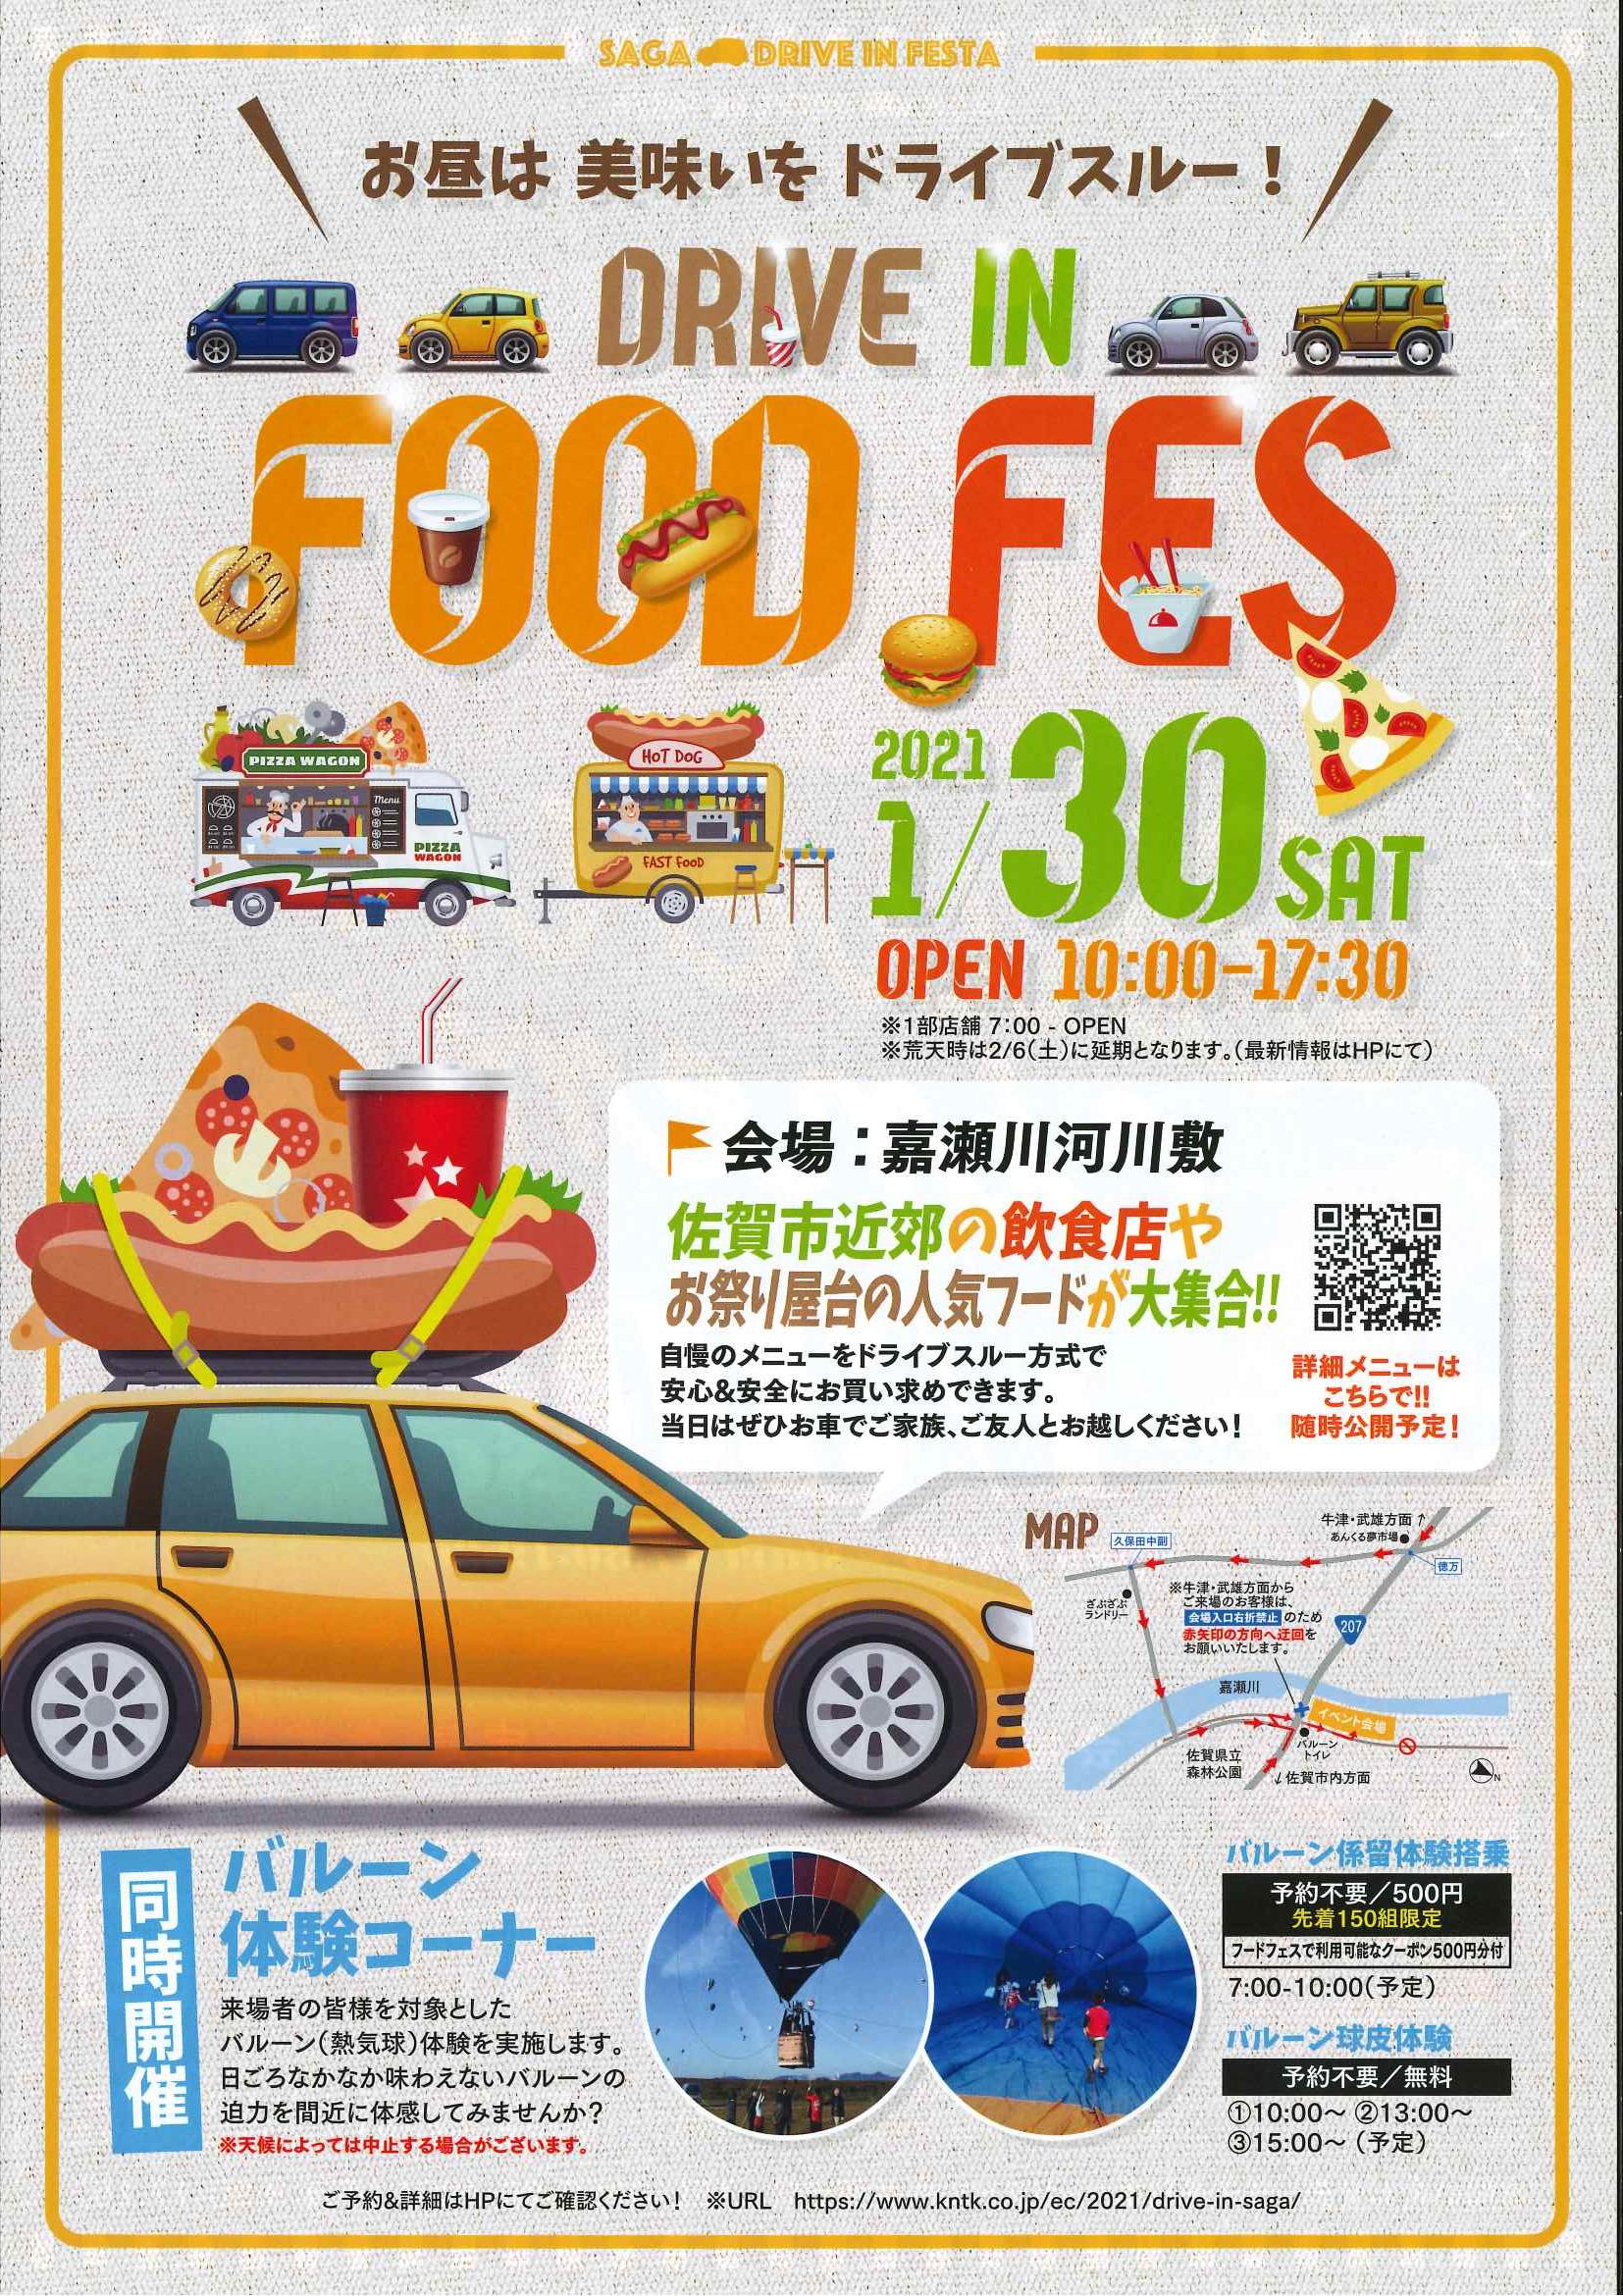 SAGA DRIVE IN FESTA　【DRIVE IN FOOD FES】の画像